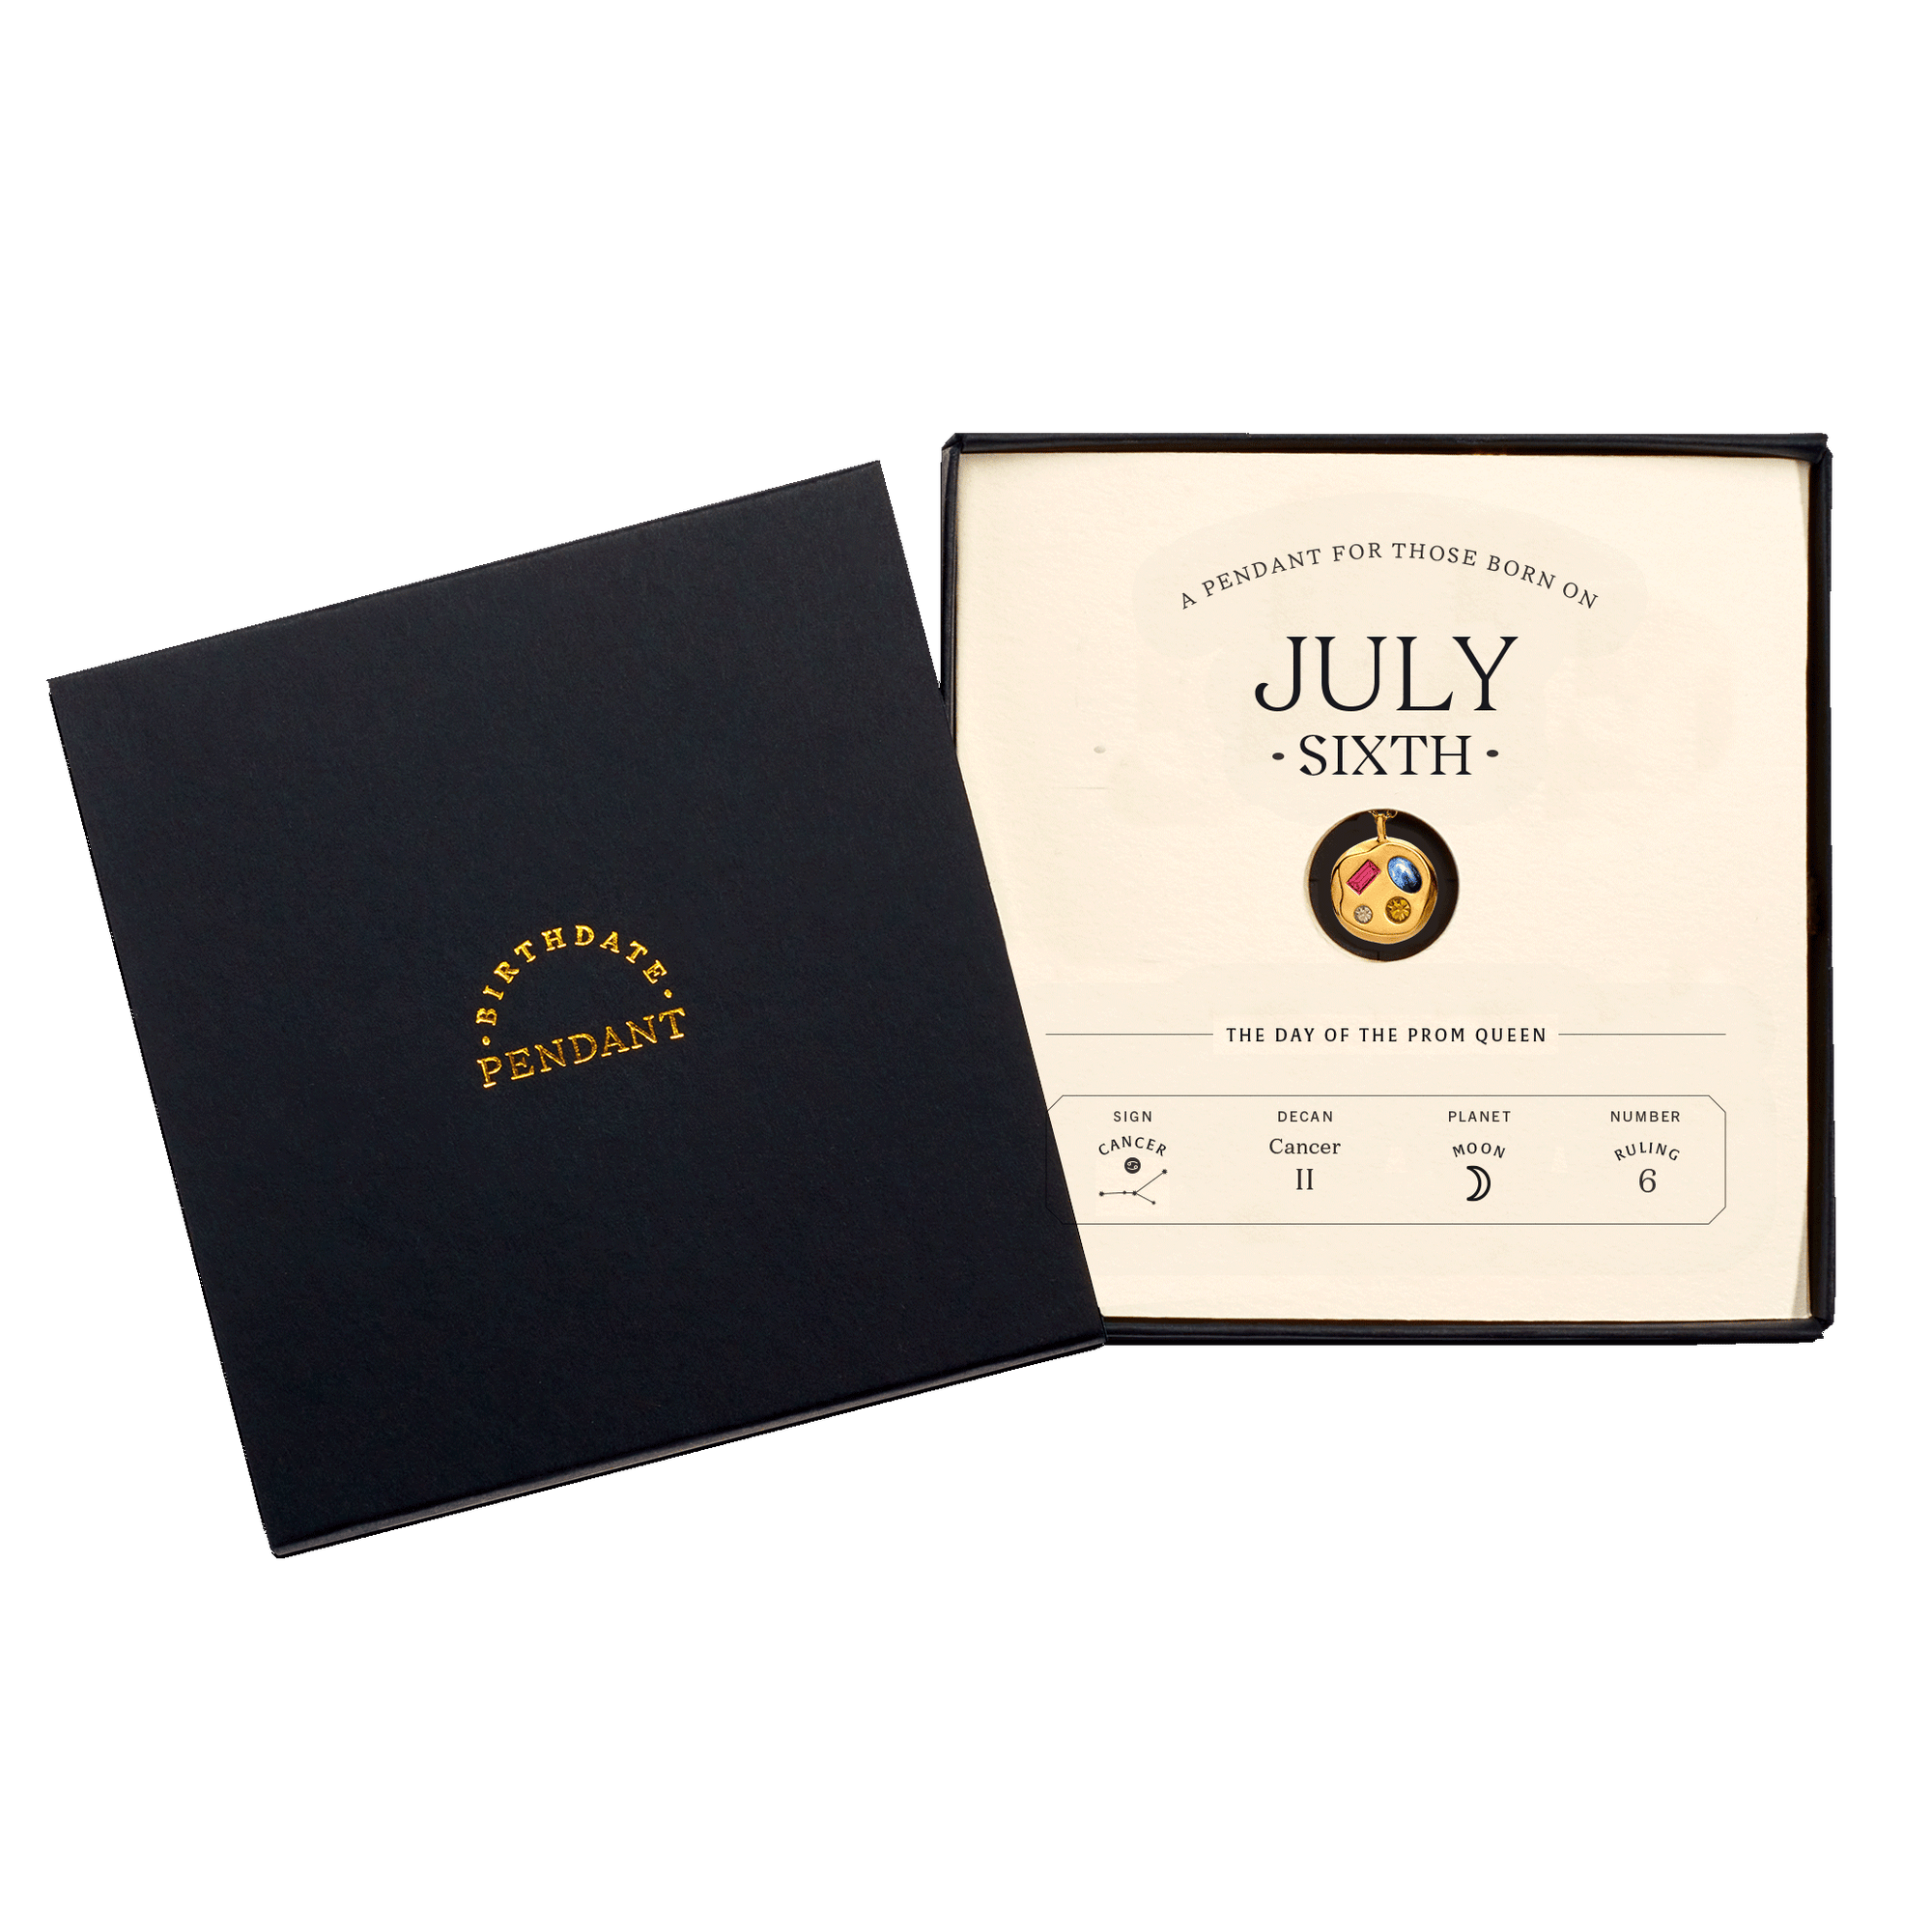 The July Sixth Pendant inside its box